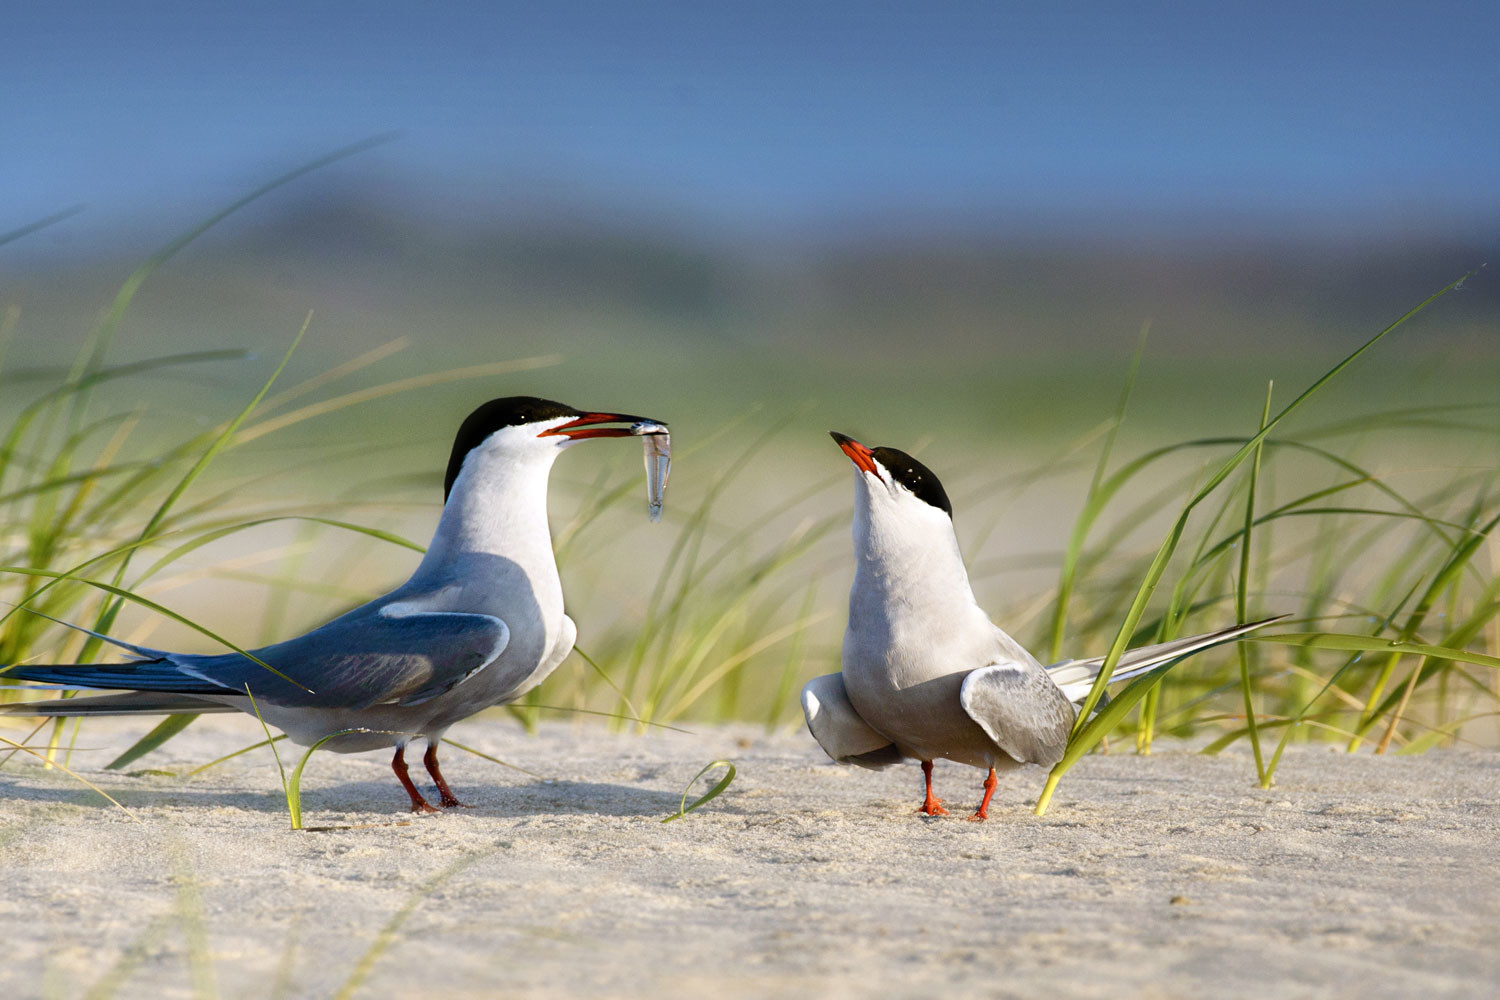 Two birds doing a mating ritual.